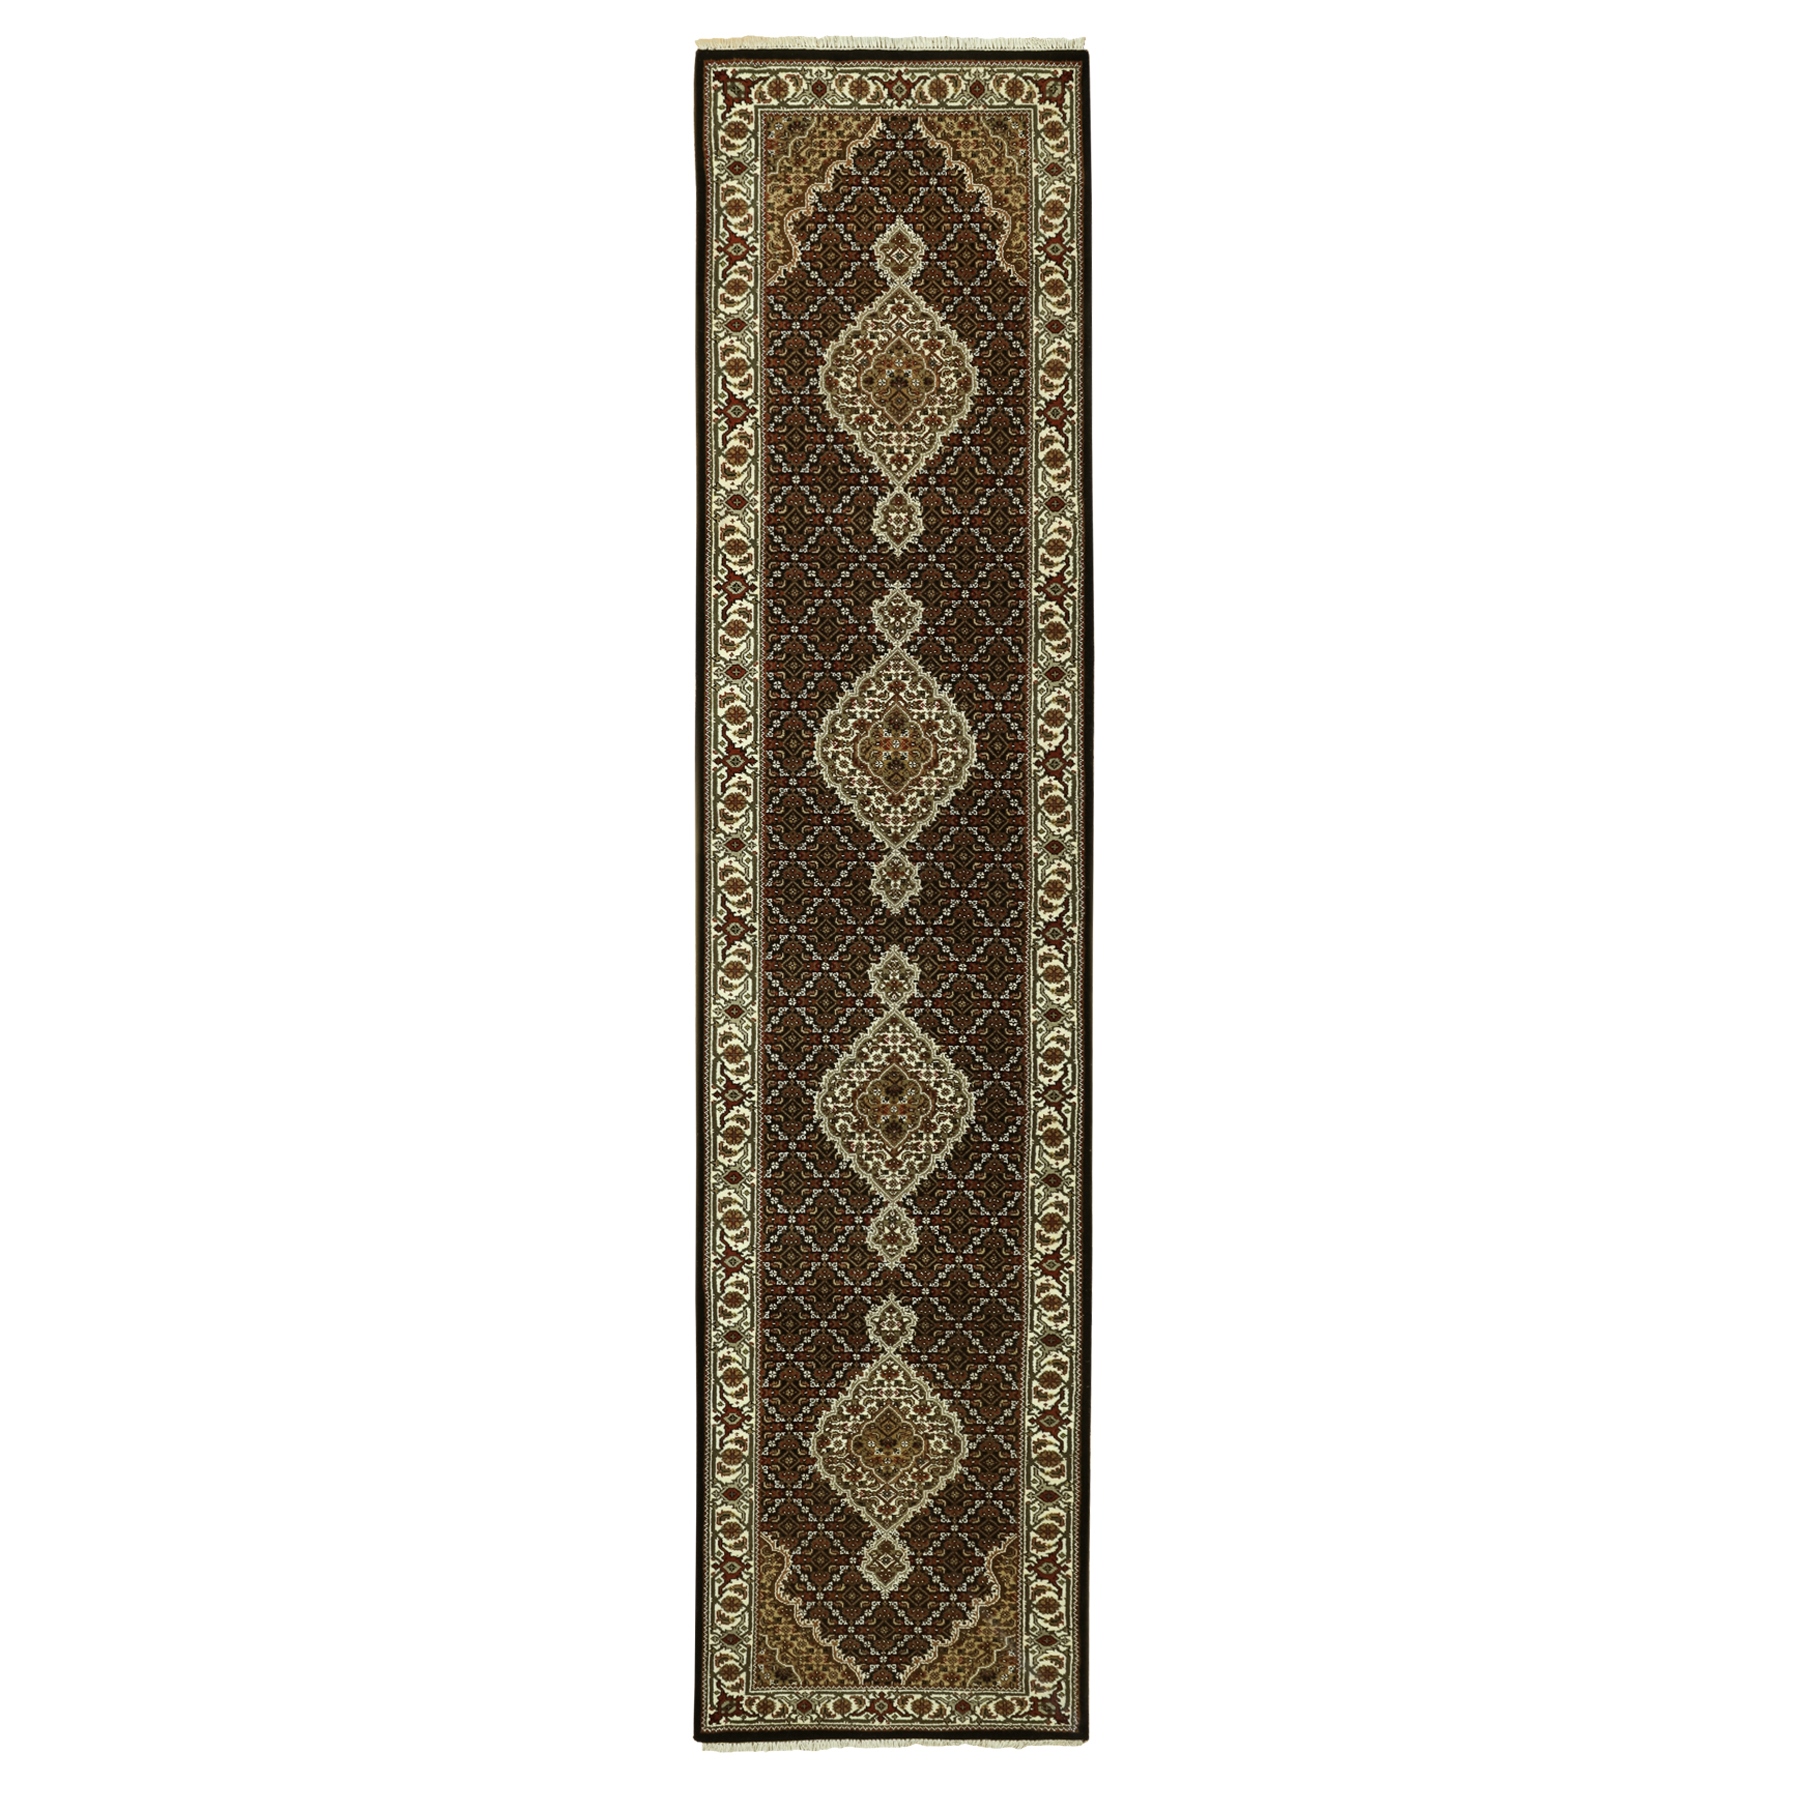 2'9"x12'2" Rich Black, Tabriz Mahi with Fish Medallion Design, 250 KPSI Wool and Silk Hand Woven, Runner Oriental Rug 